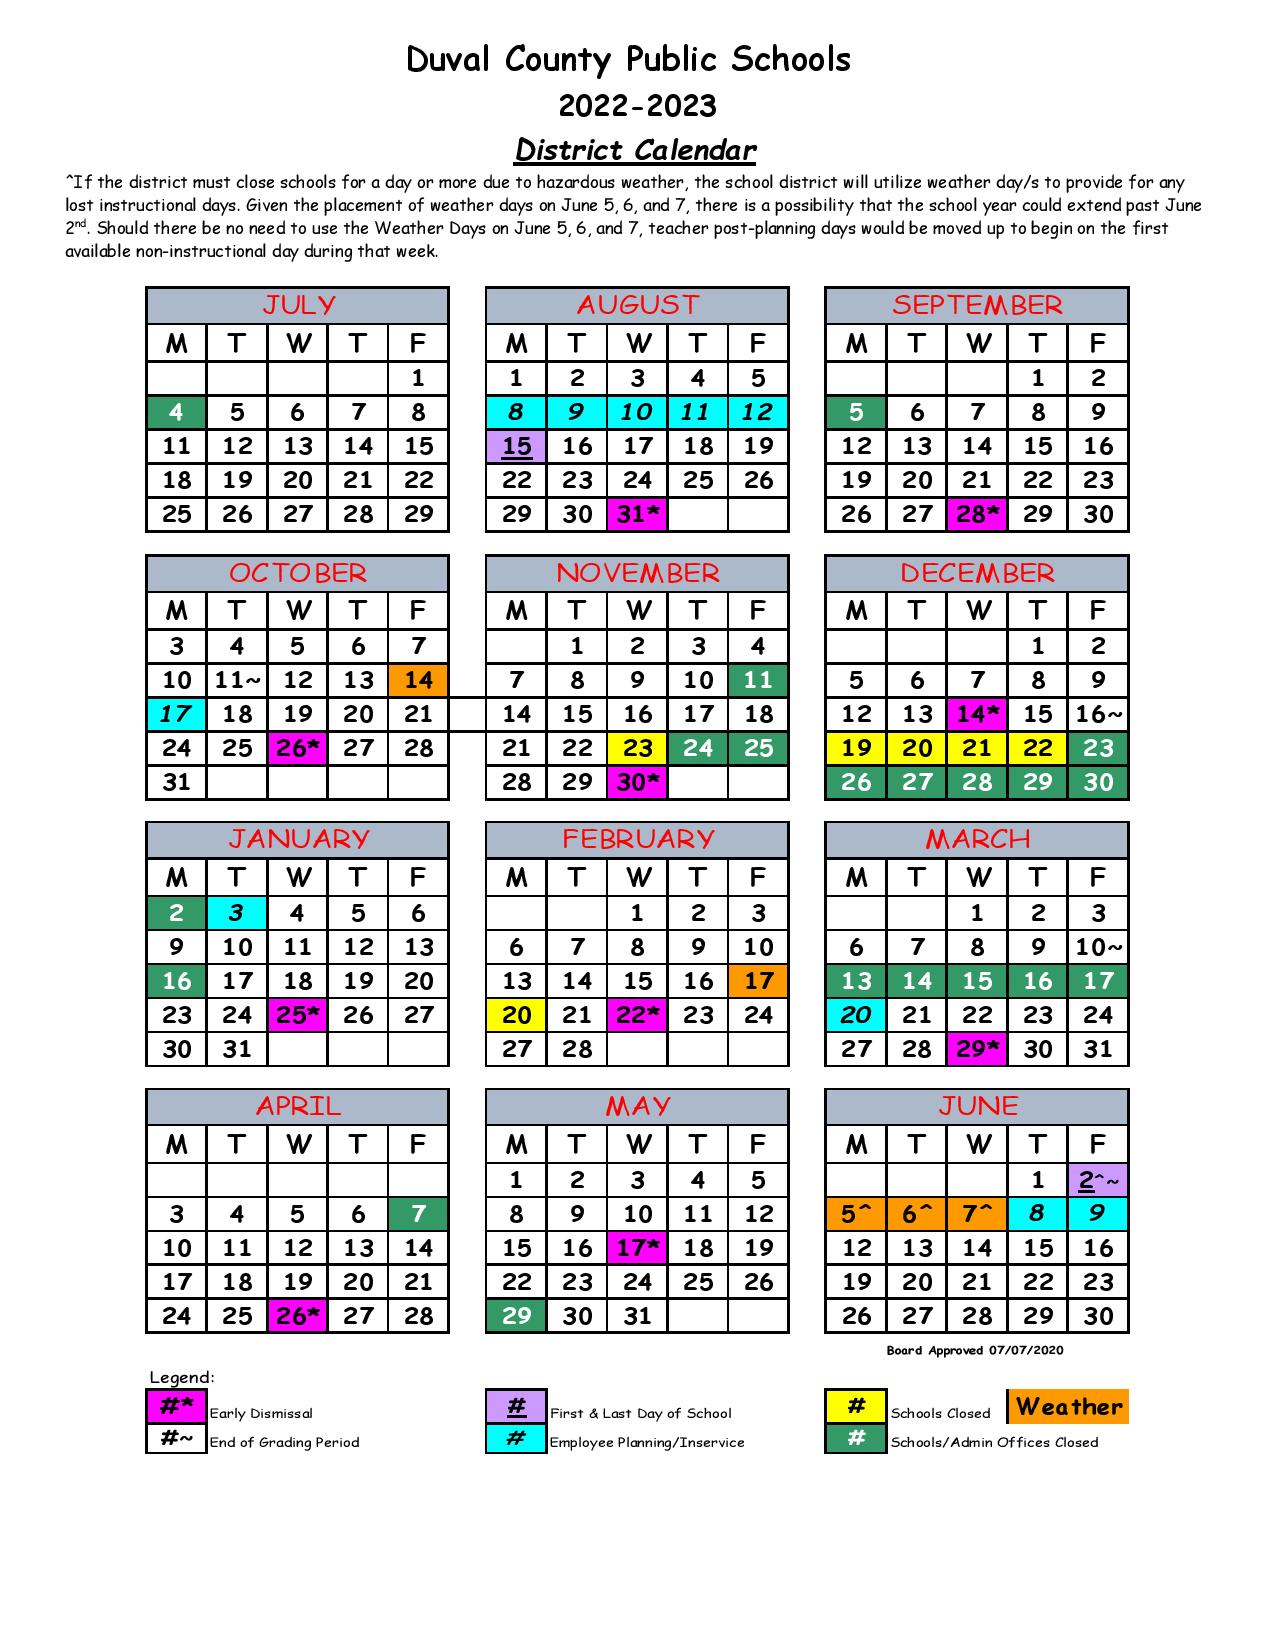 Duval County Public Schools Calendar 2022 2023 in PDF